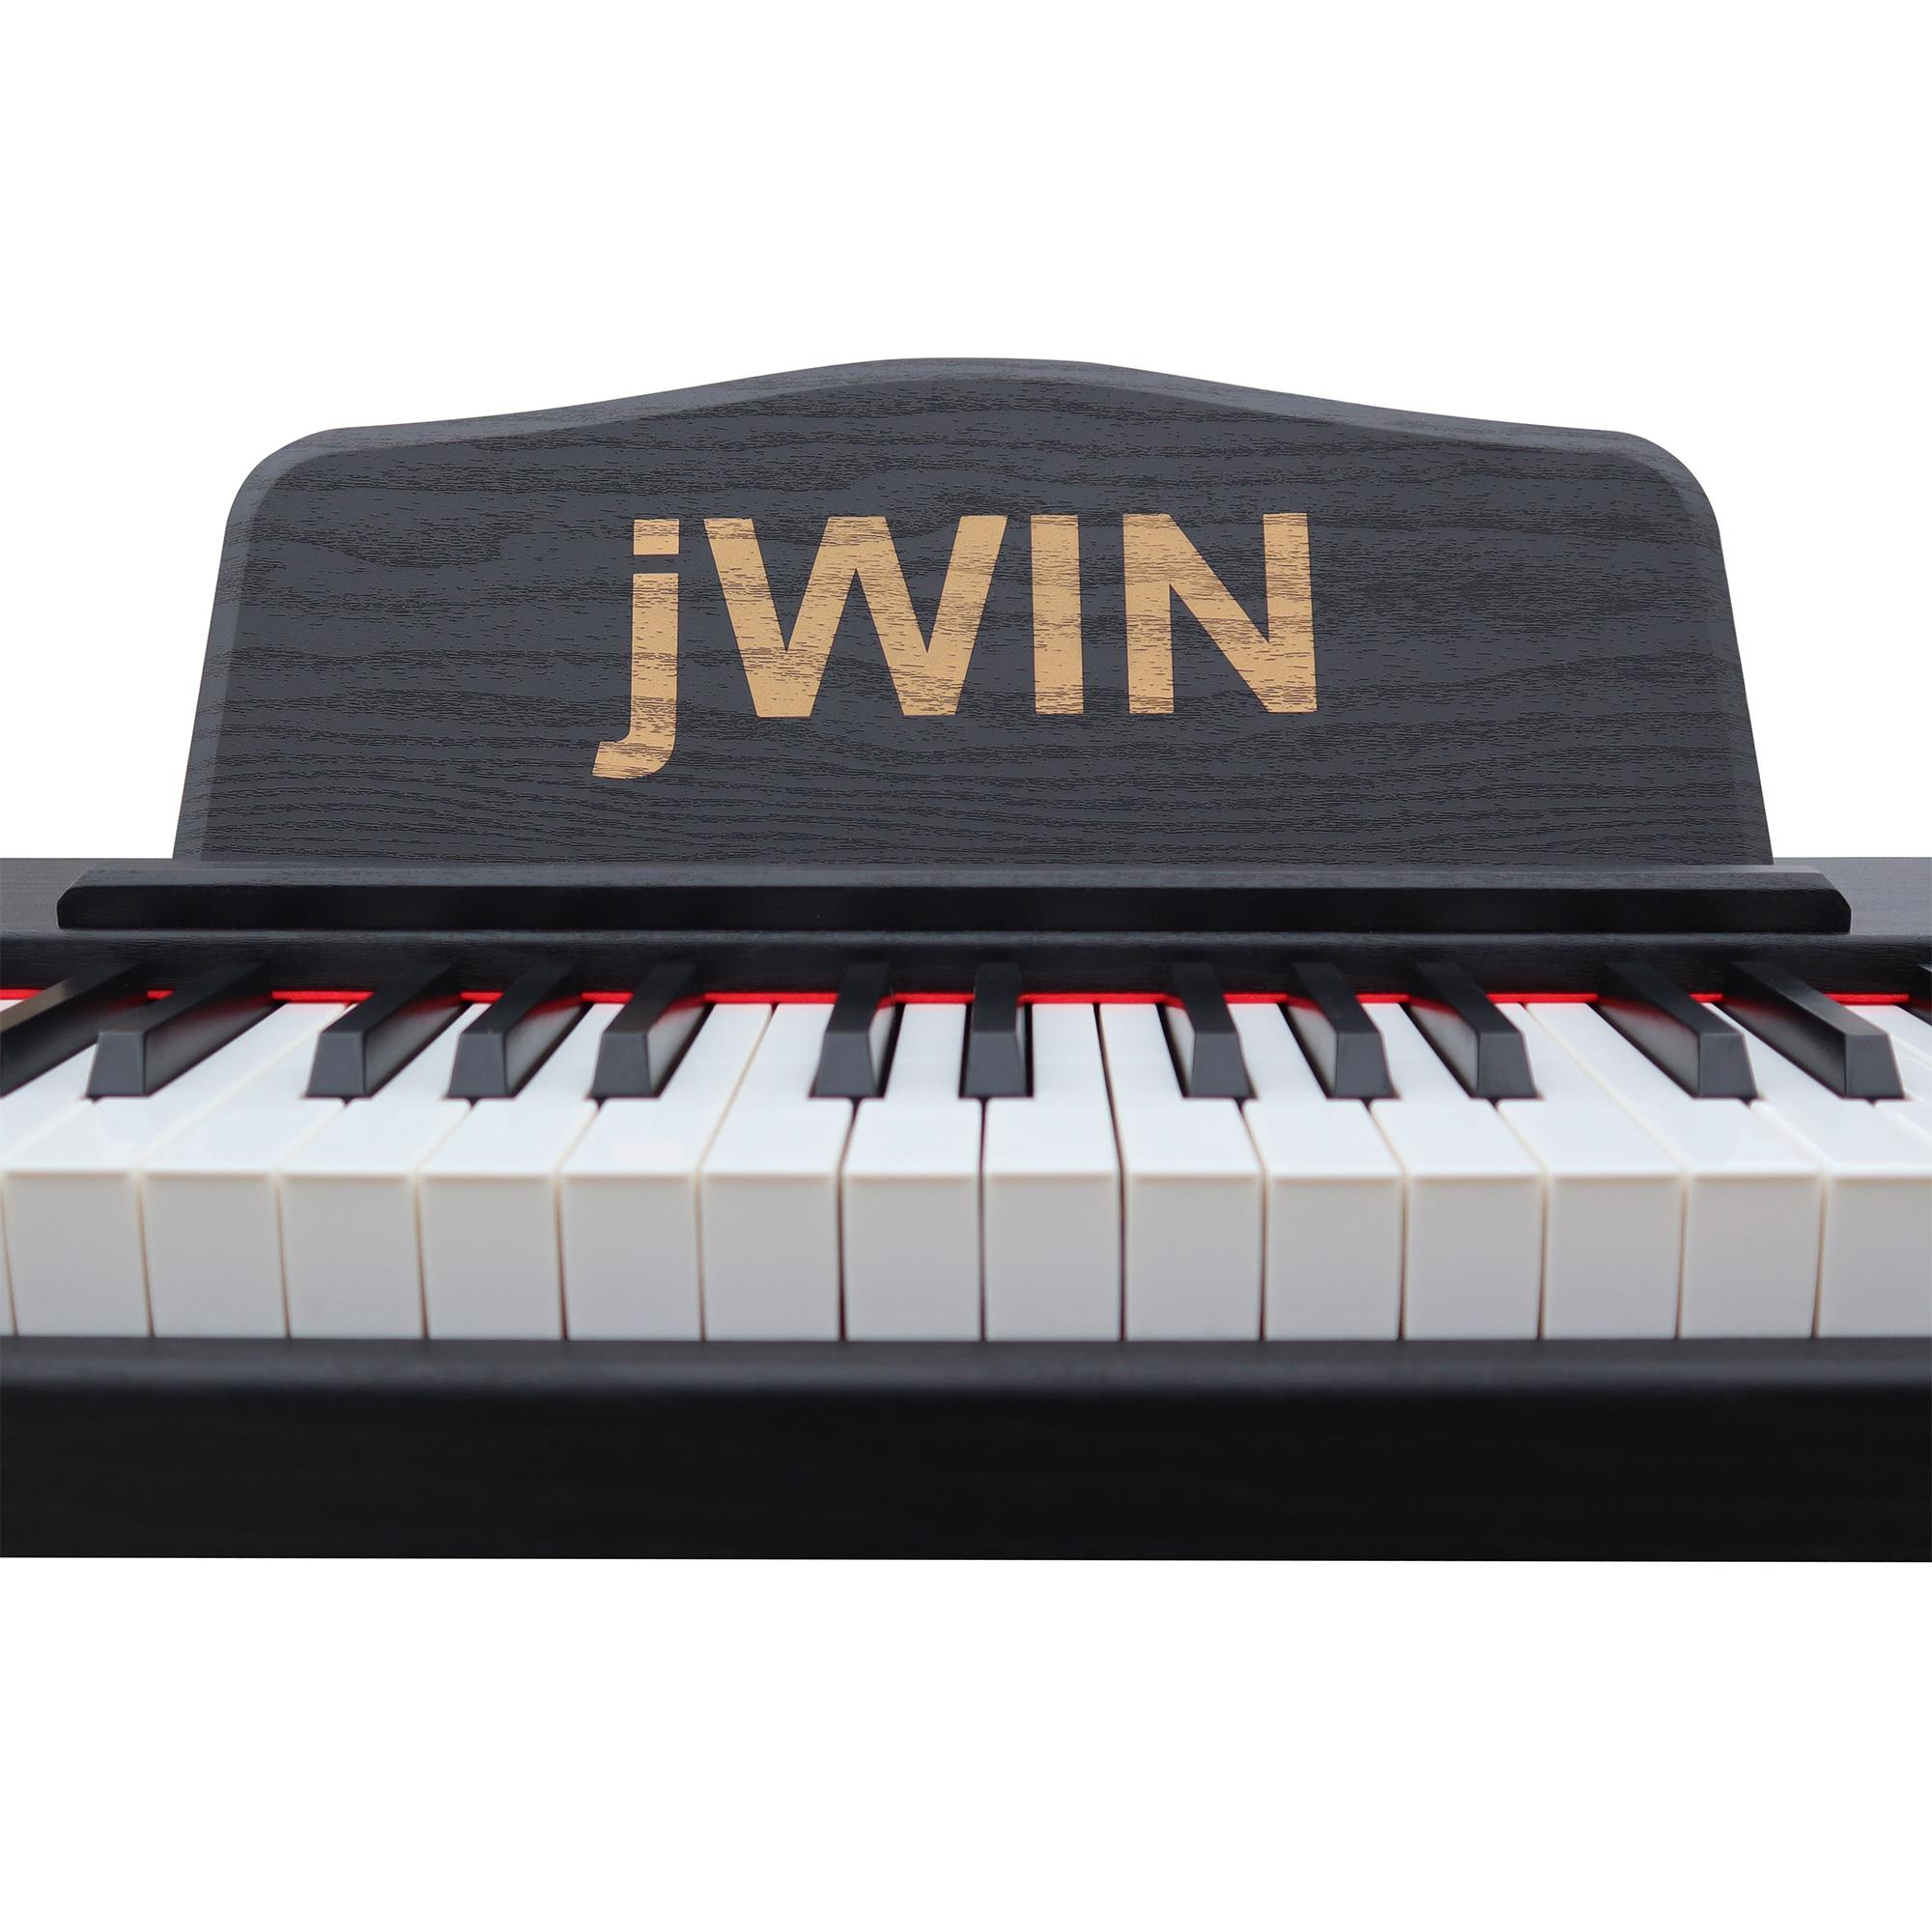 Jwin SDP-88 Tuş Hassasiyetli 88 Tuşlu Dijital Piyano - Siyah - Depodan  Kapıya